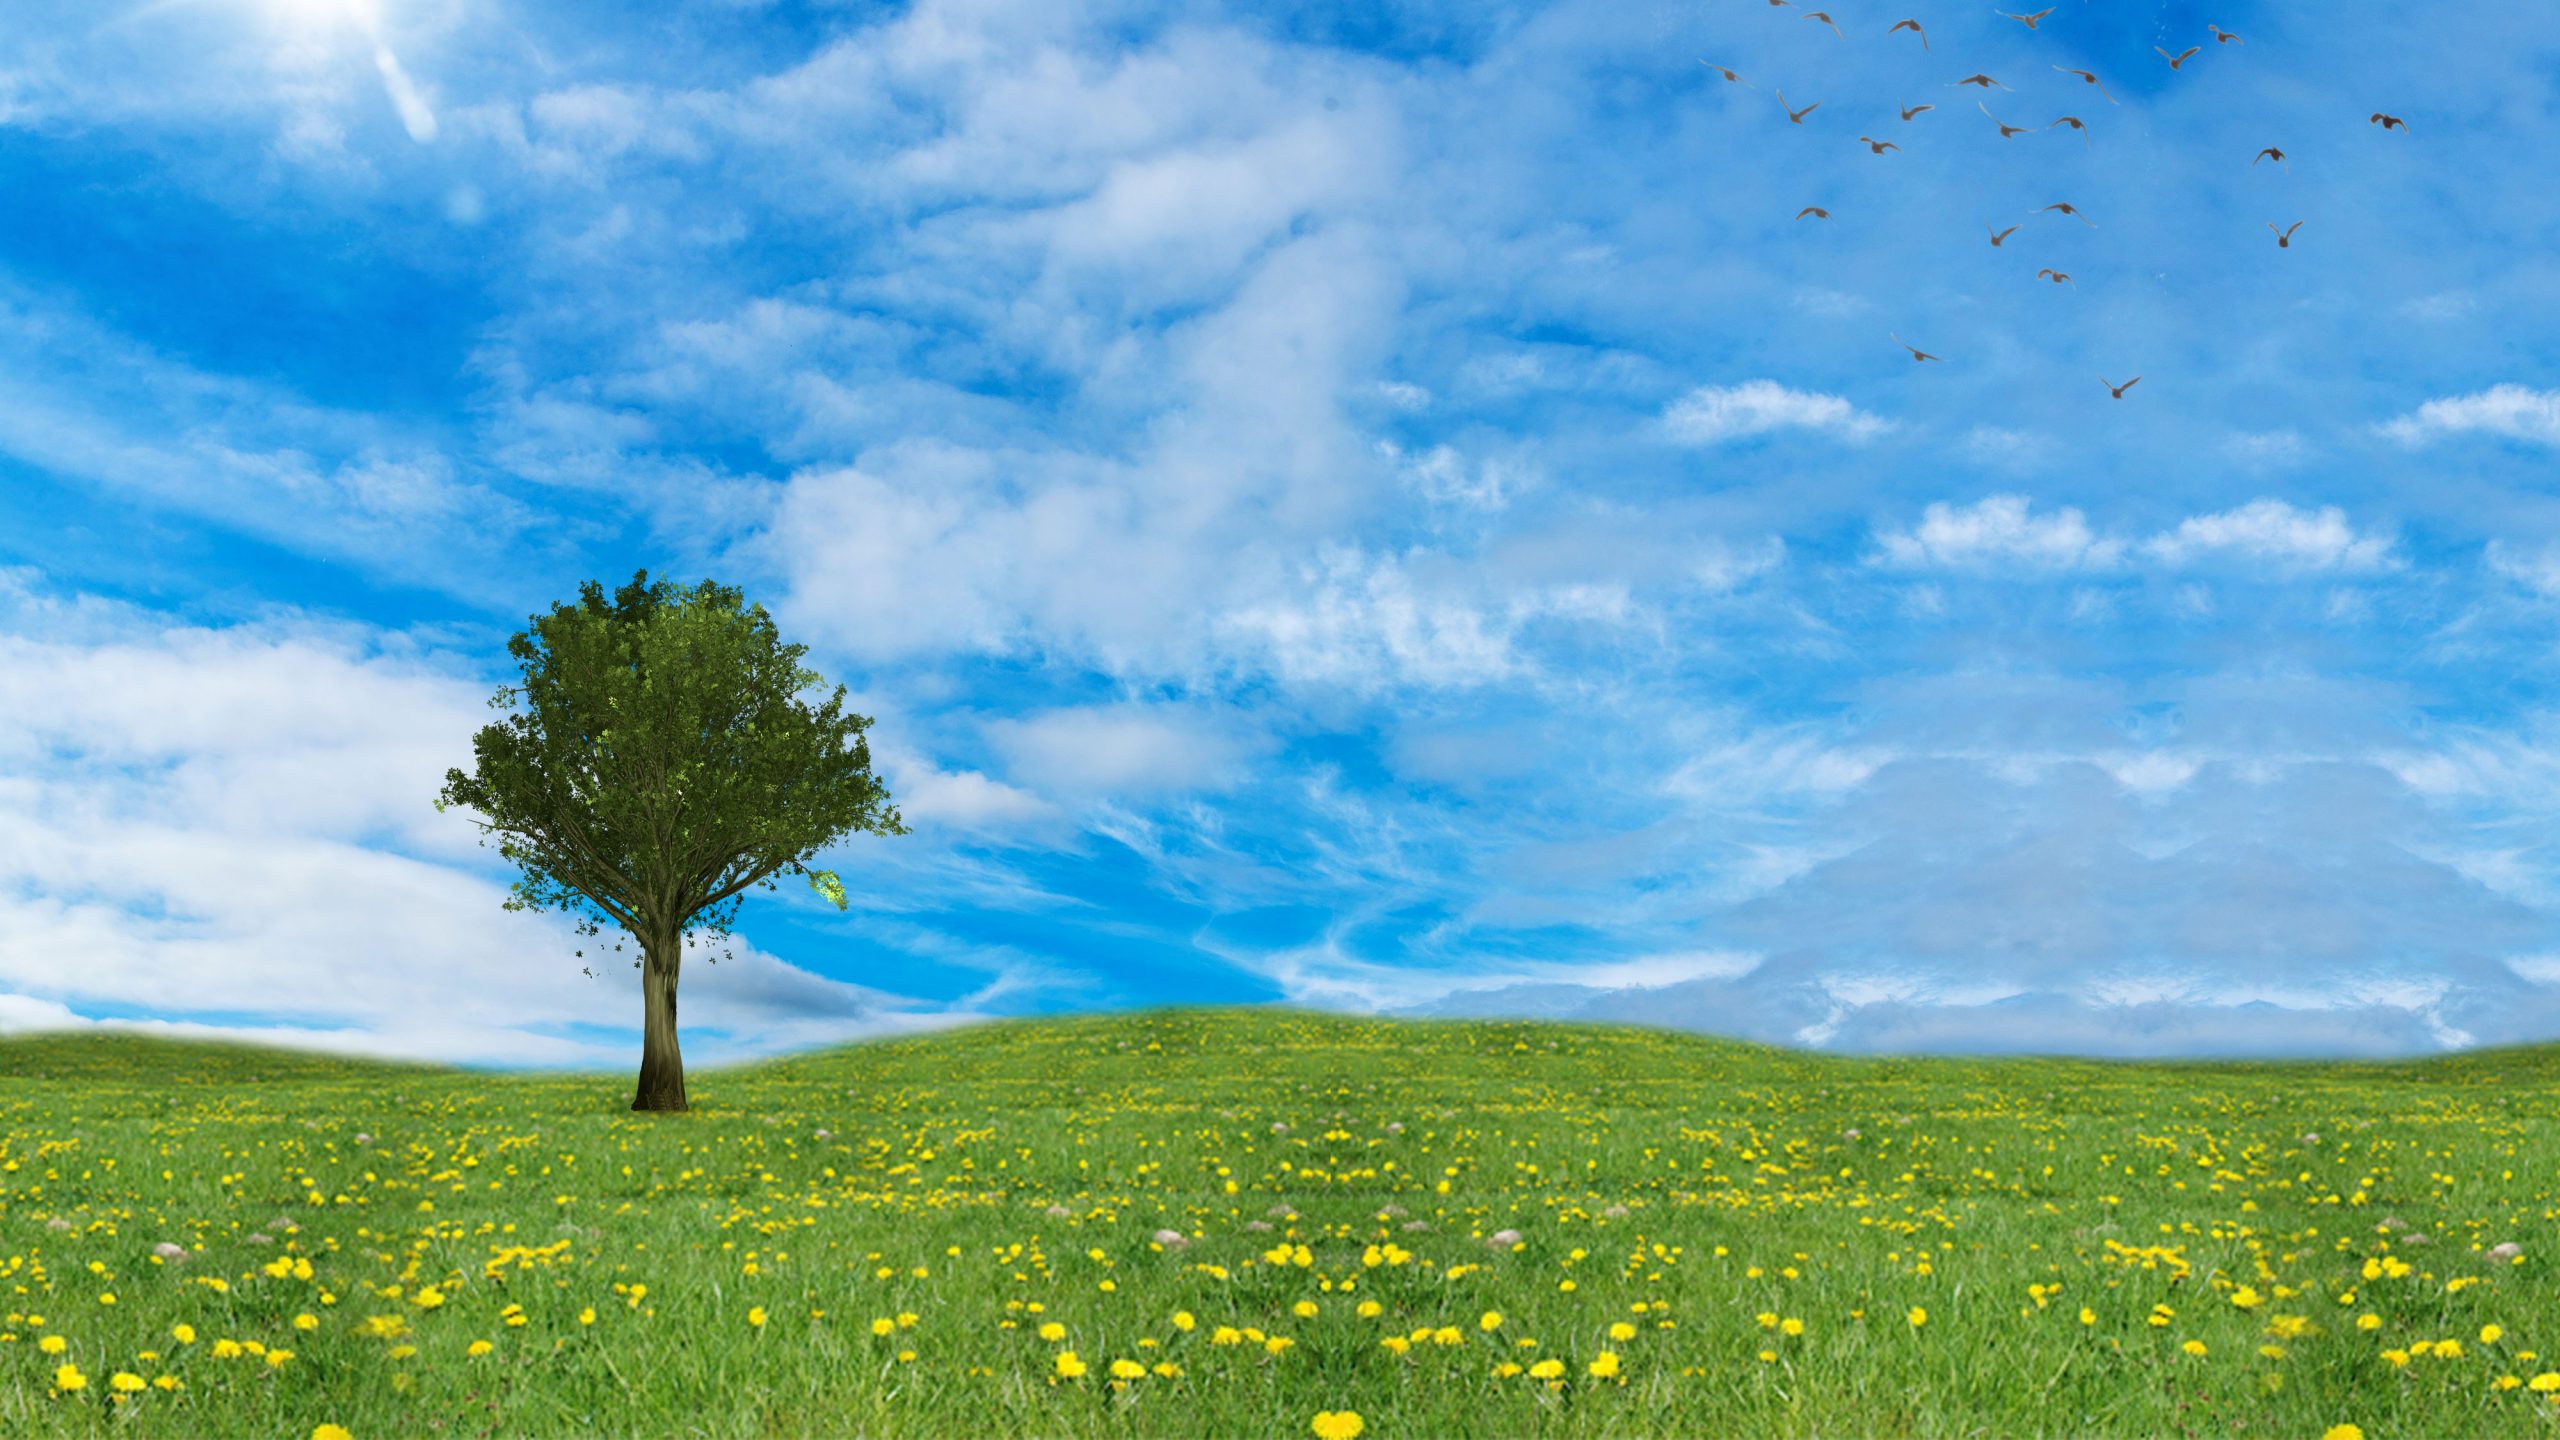 grass-field-tree-blue-sky-background